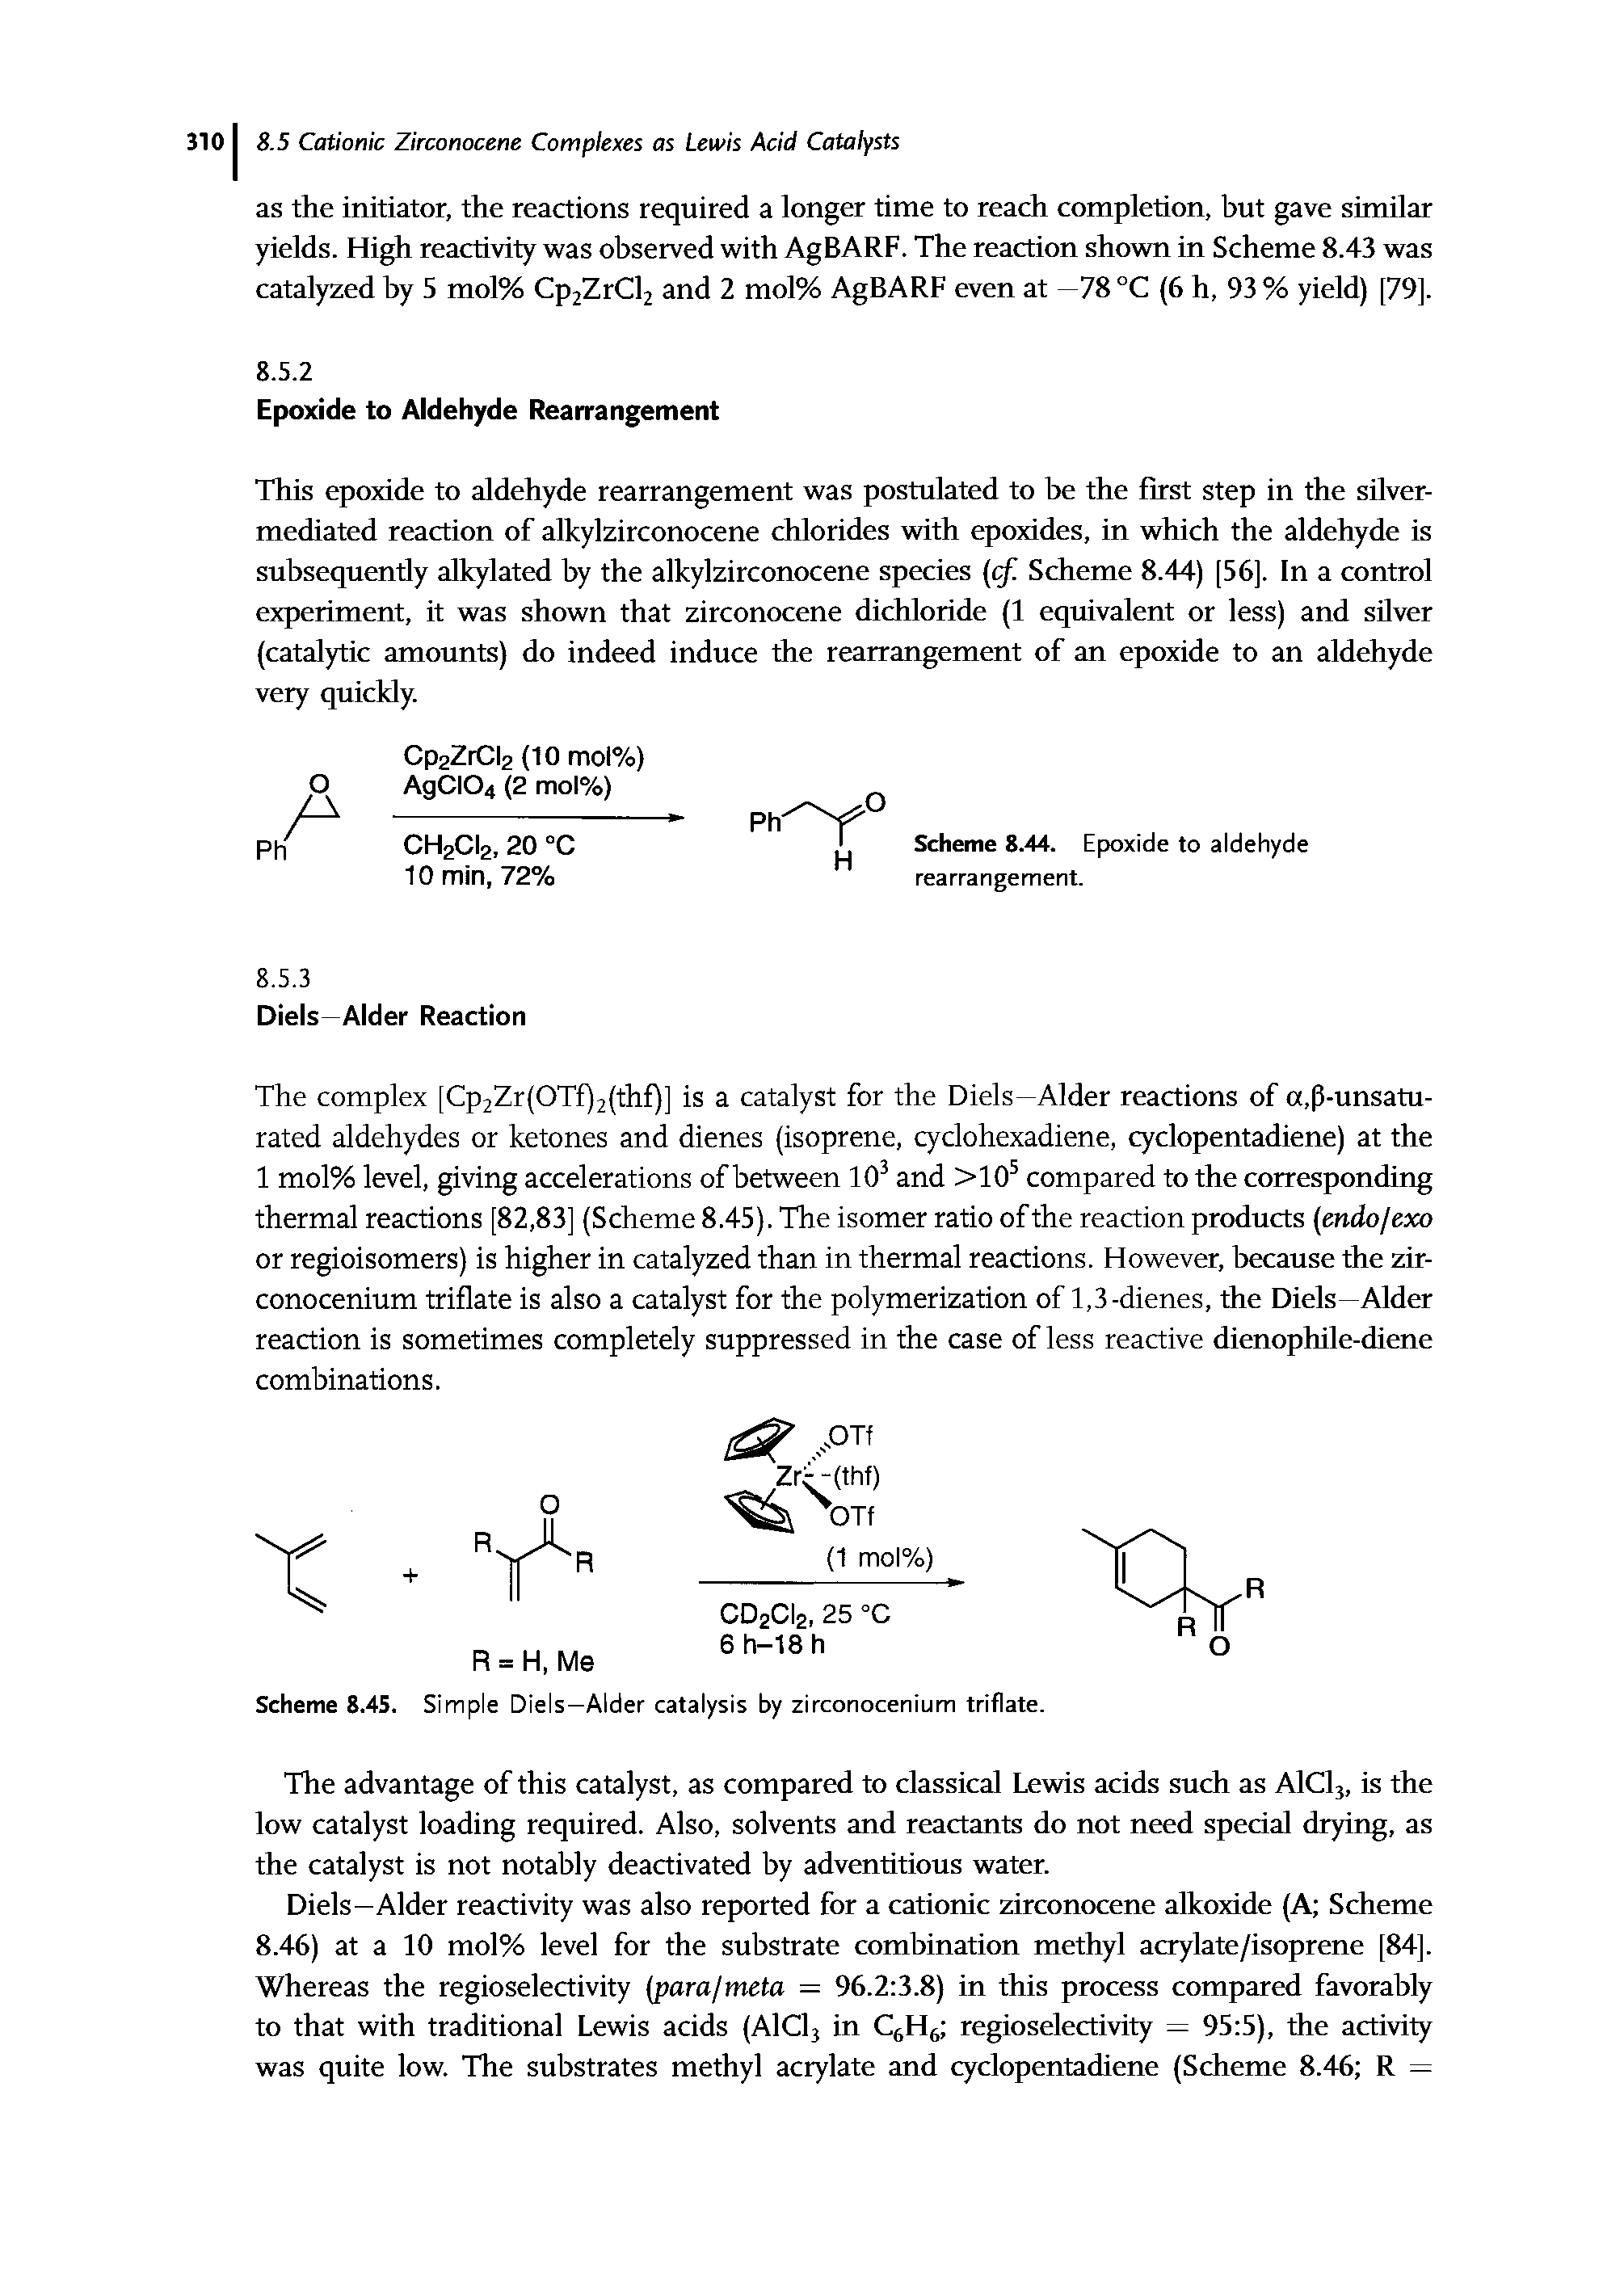 Scheme 8.4S. Simple Diels—Alder catalysis by zirconocenium triflate.